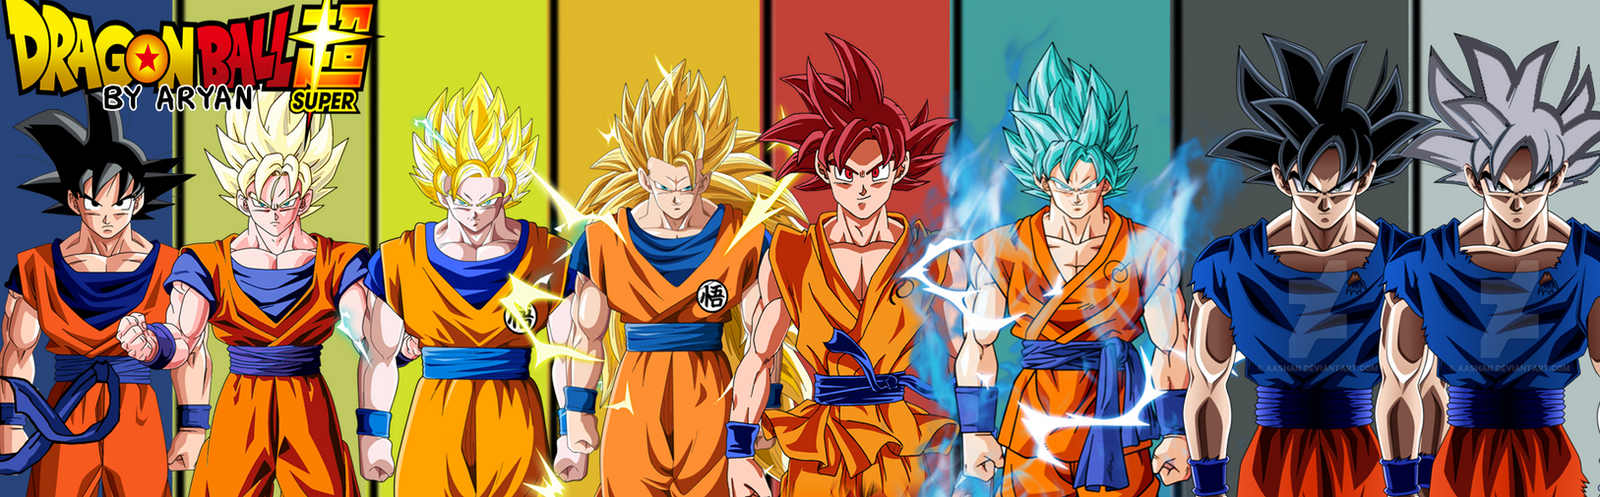 Goku All Super Saiyan Forms Poster/Wallpaper by aryanxcreation on DeviantArt